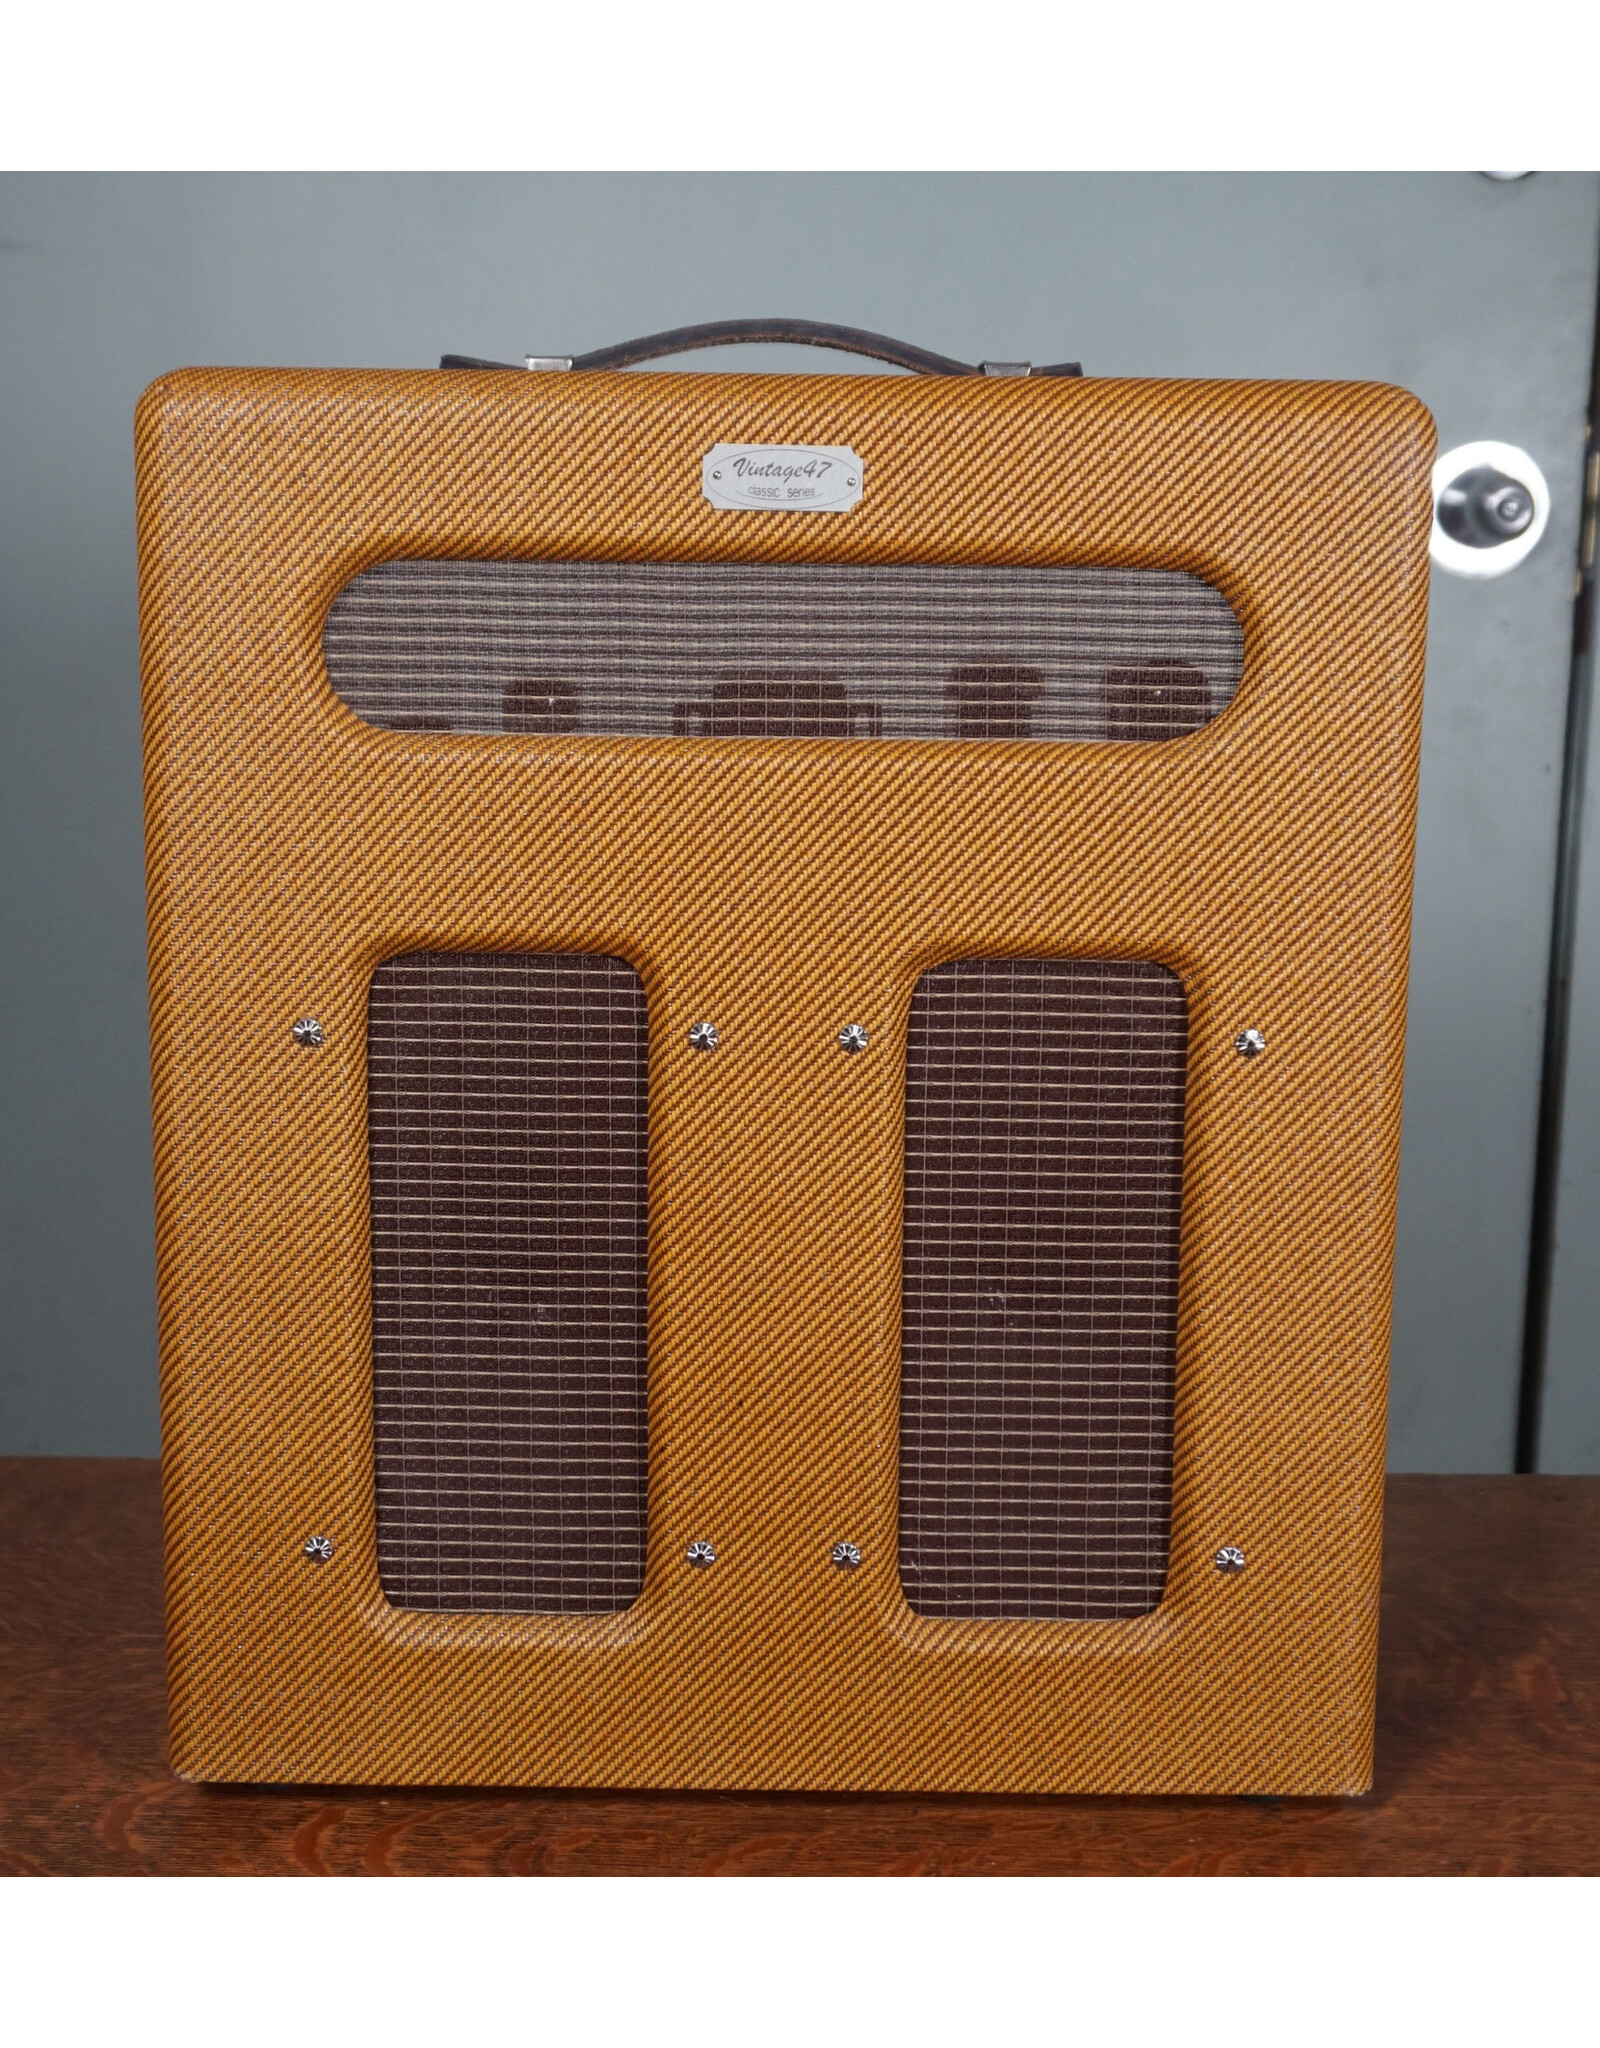 Vintage 47 Vintage 47 Amps Twin Supreme Combo Amp, Tweed w/ Tolex Stripe, Used